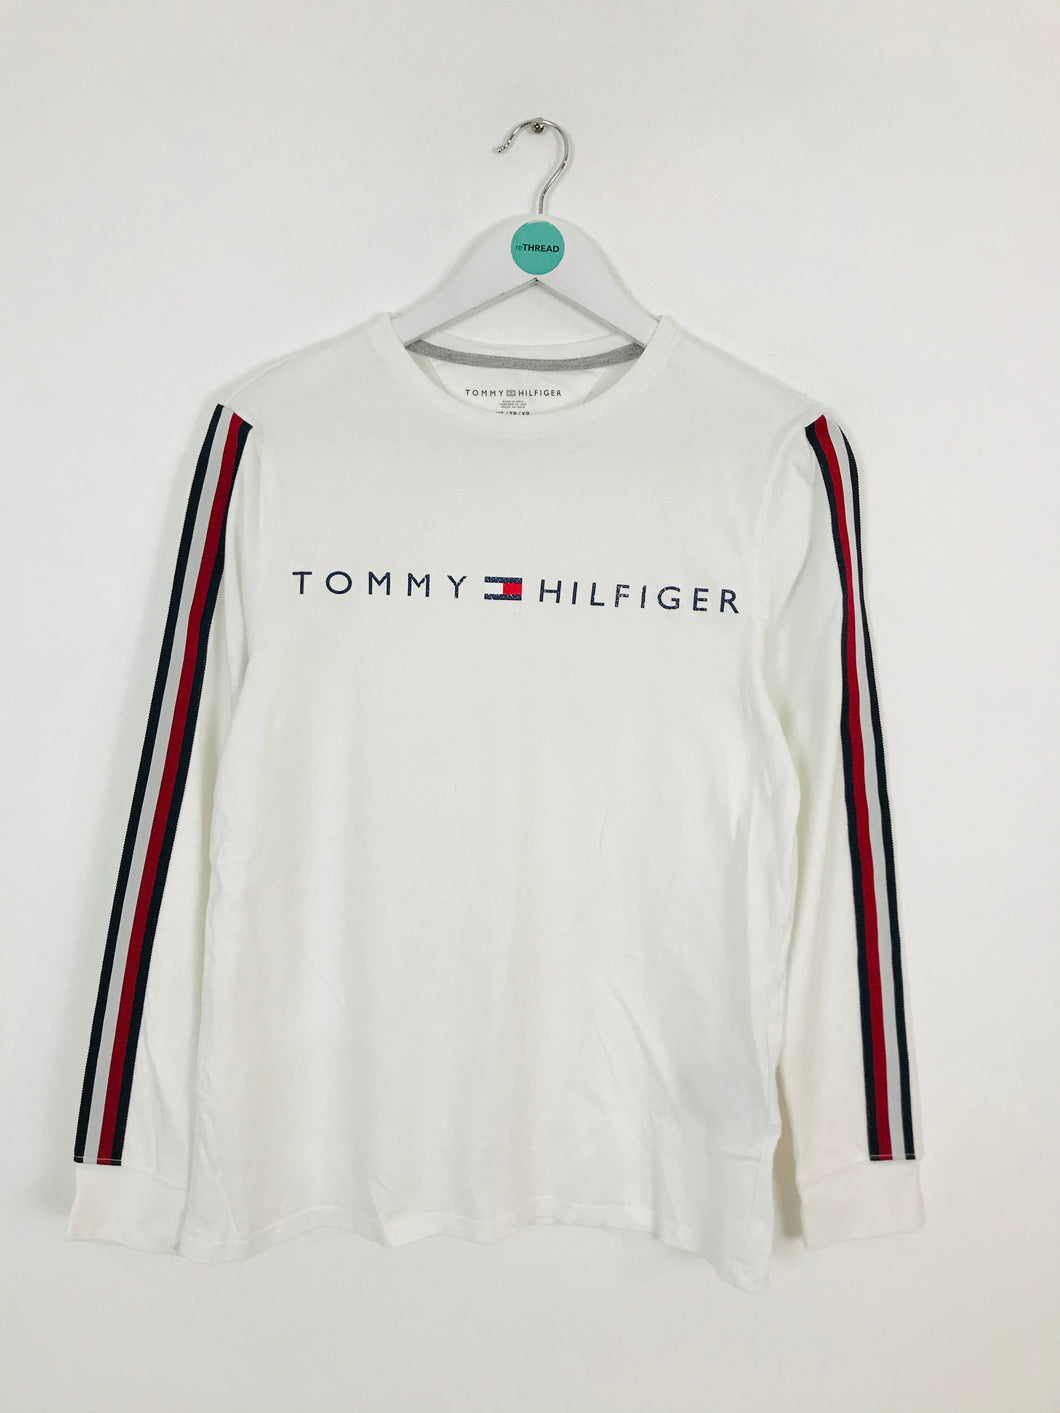 Tommy Hilfiger Men’s Long Sleeve Tshirt | XS | White